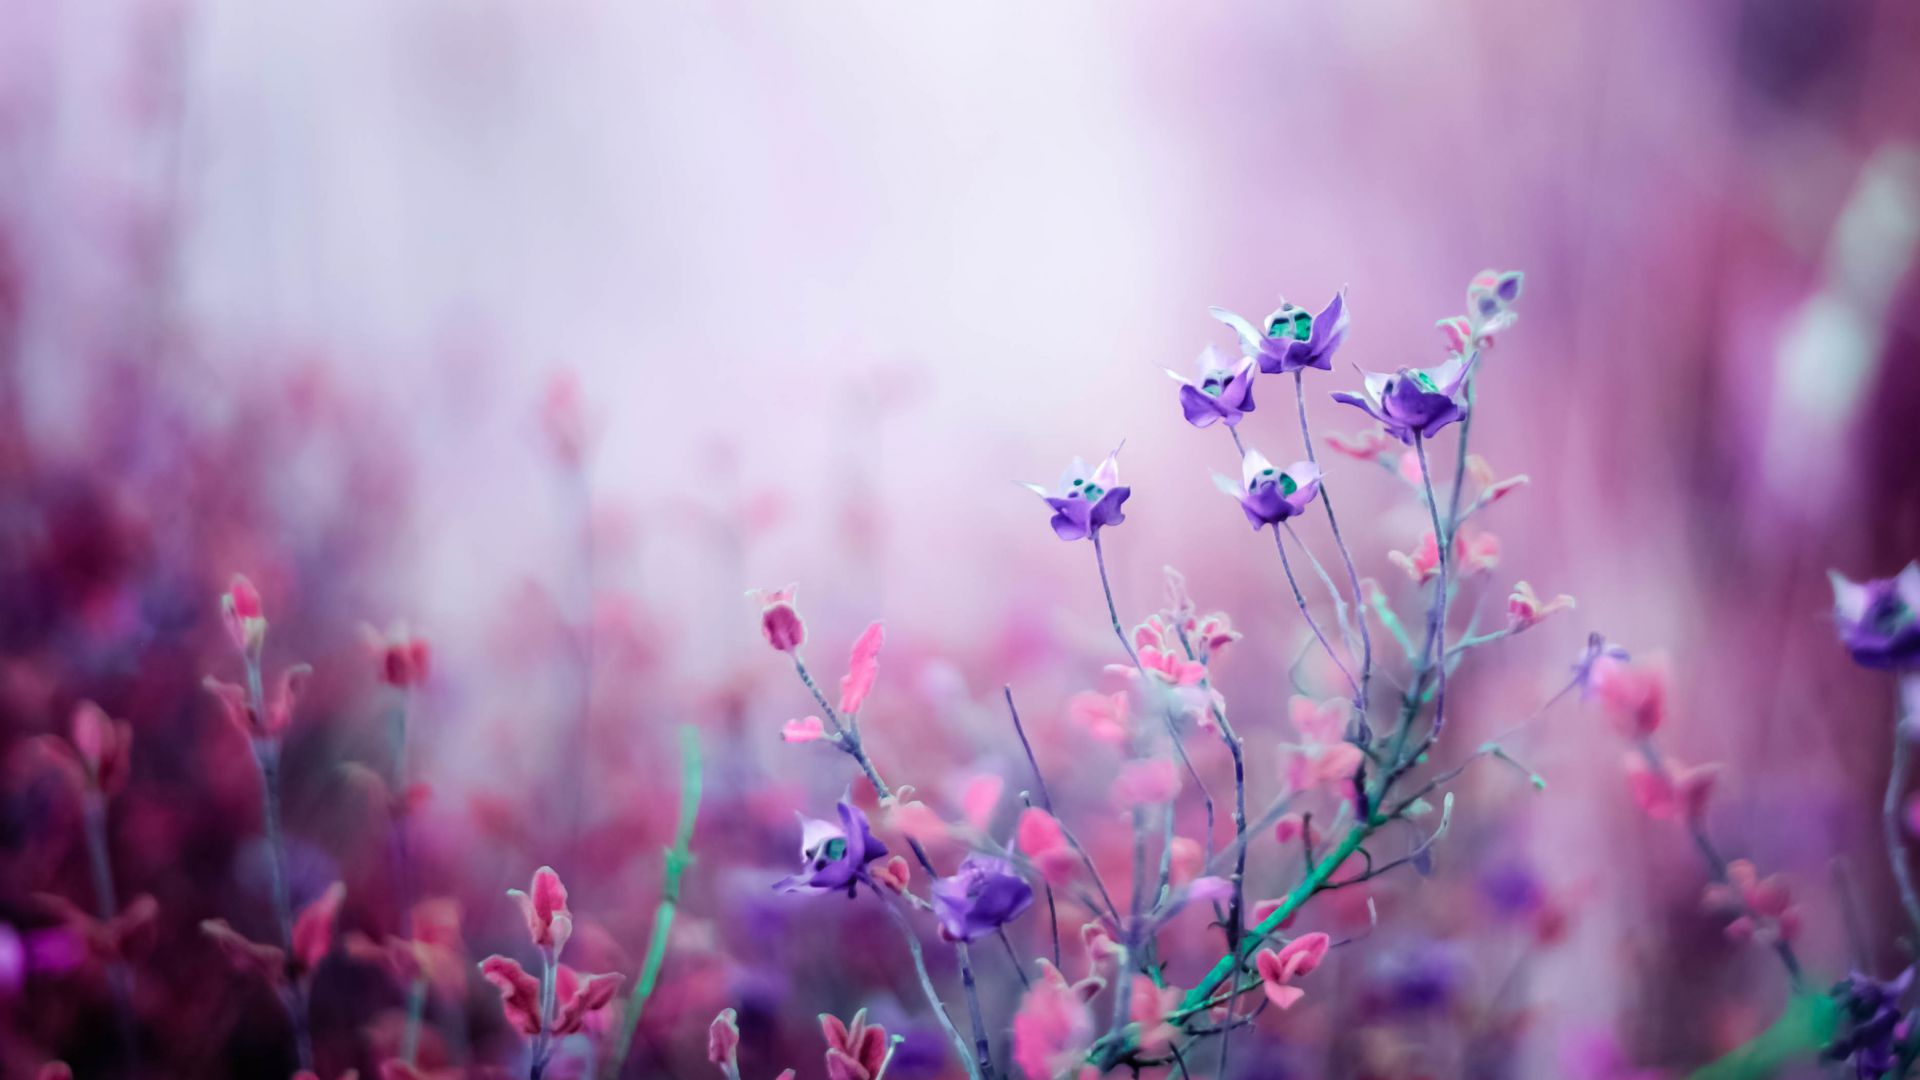 Полевые цветы, 4k, HD, фиолетовый, Wildflowers, 4k, HD wallpaper, purple (horizontal)